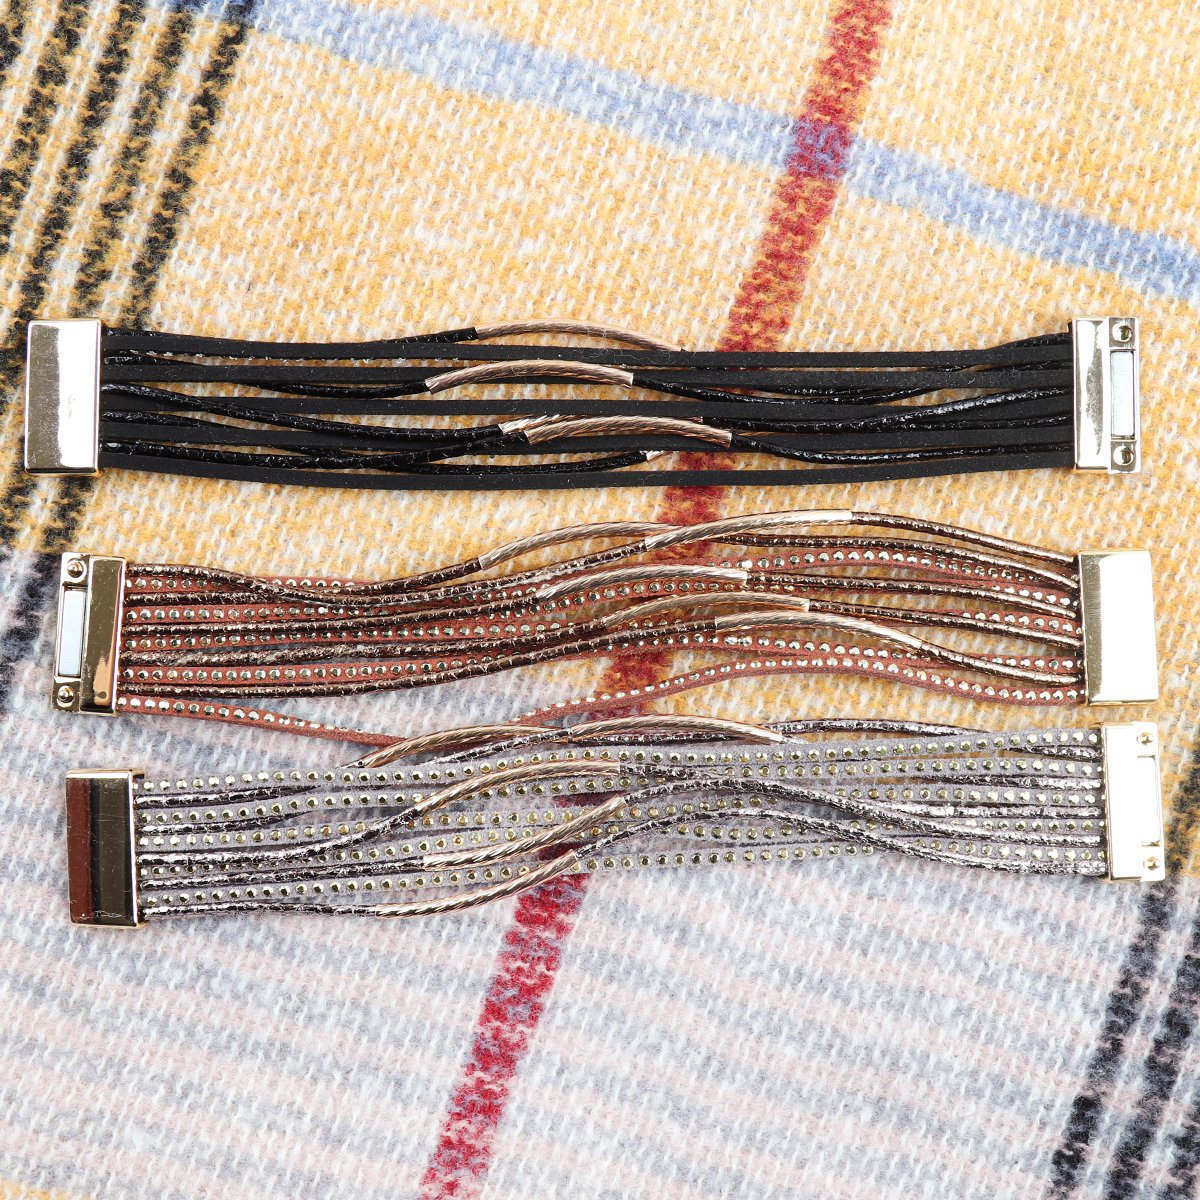 Hdb3067 - Multiline Leather Magnetic Bracelet - LOLA LUXE